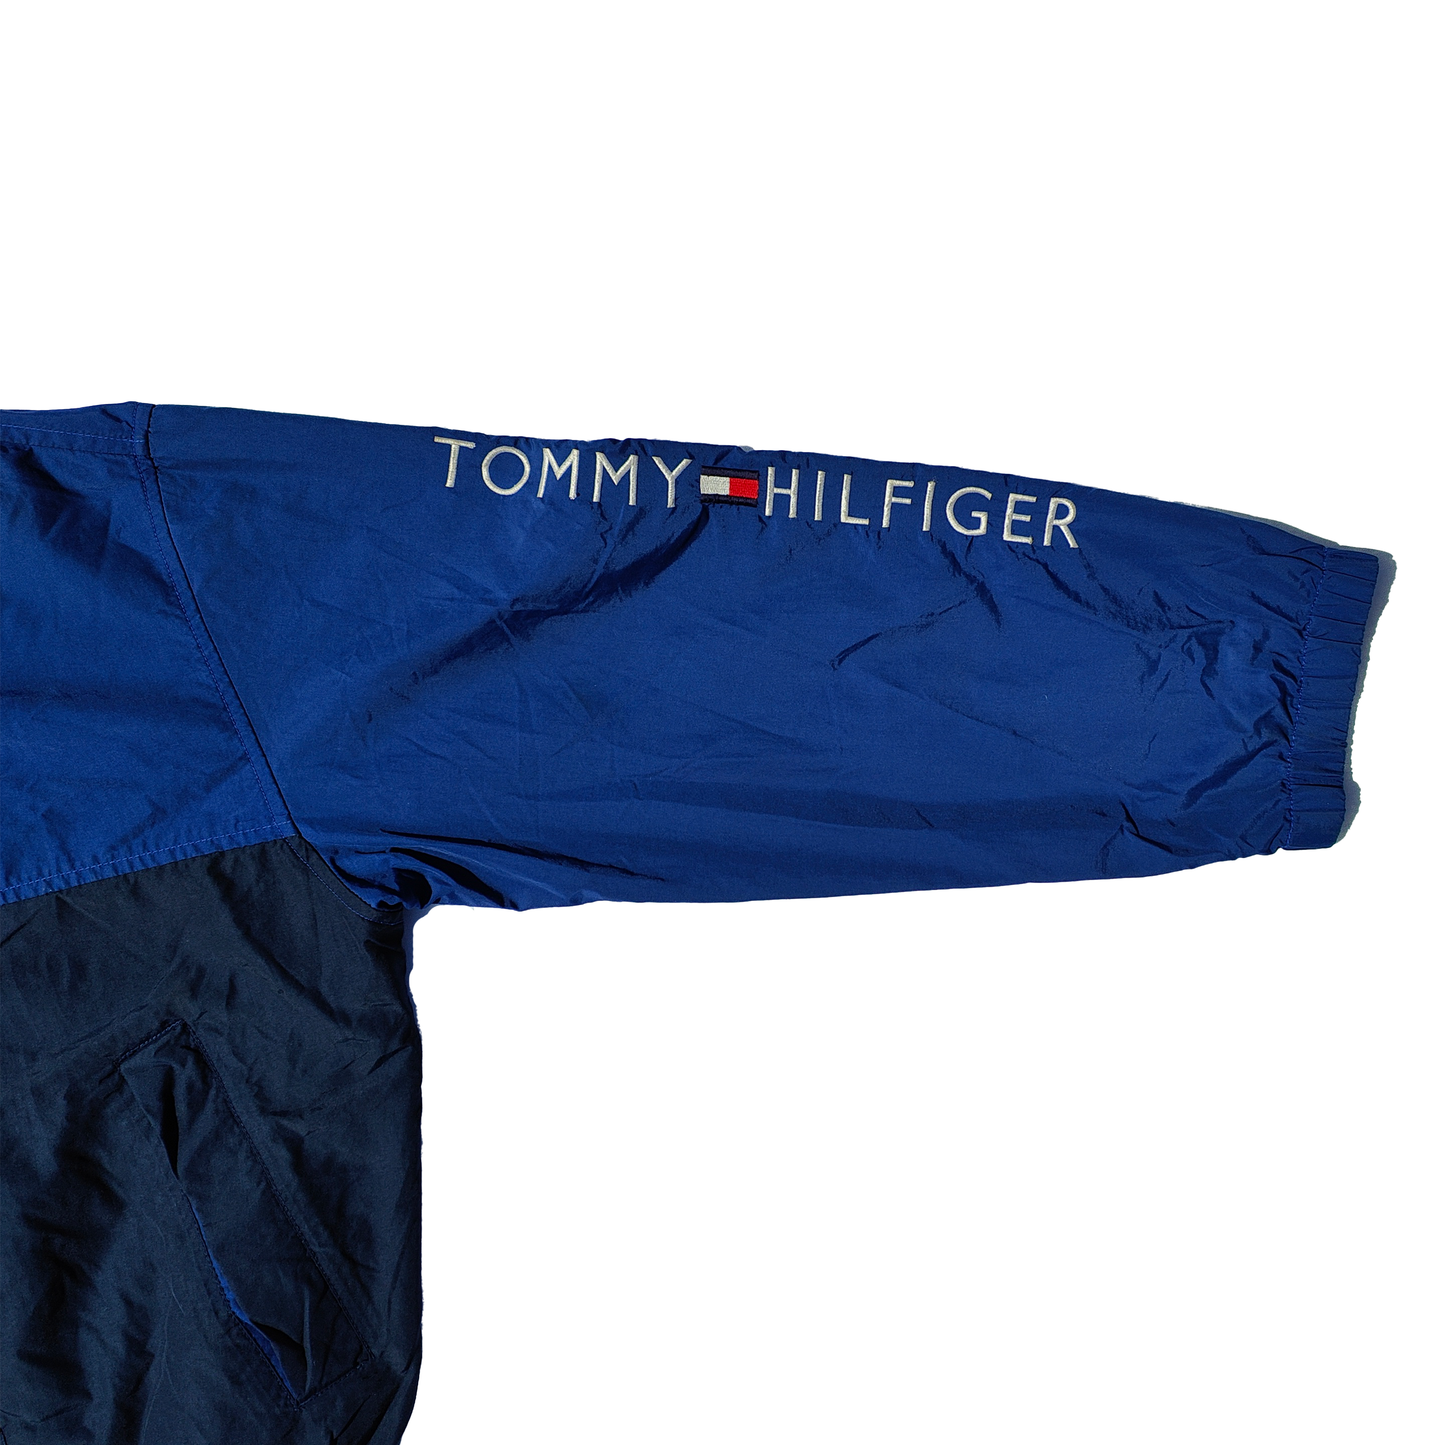 Tommy Hilfiger Windbreaker - SMALL